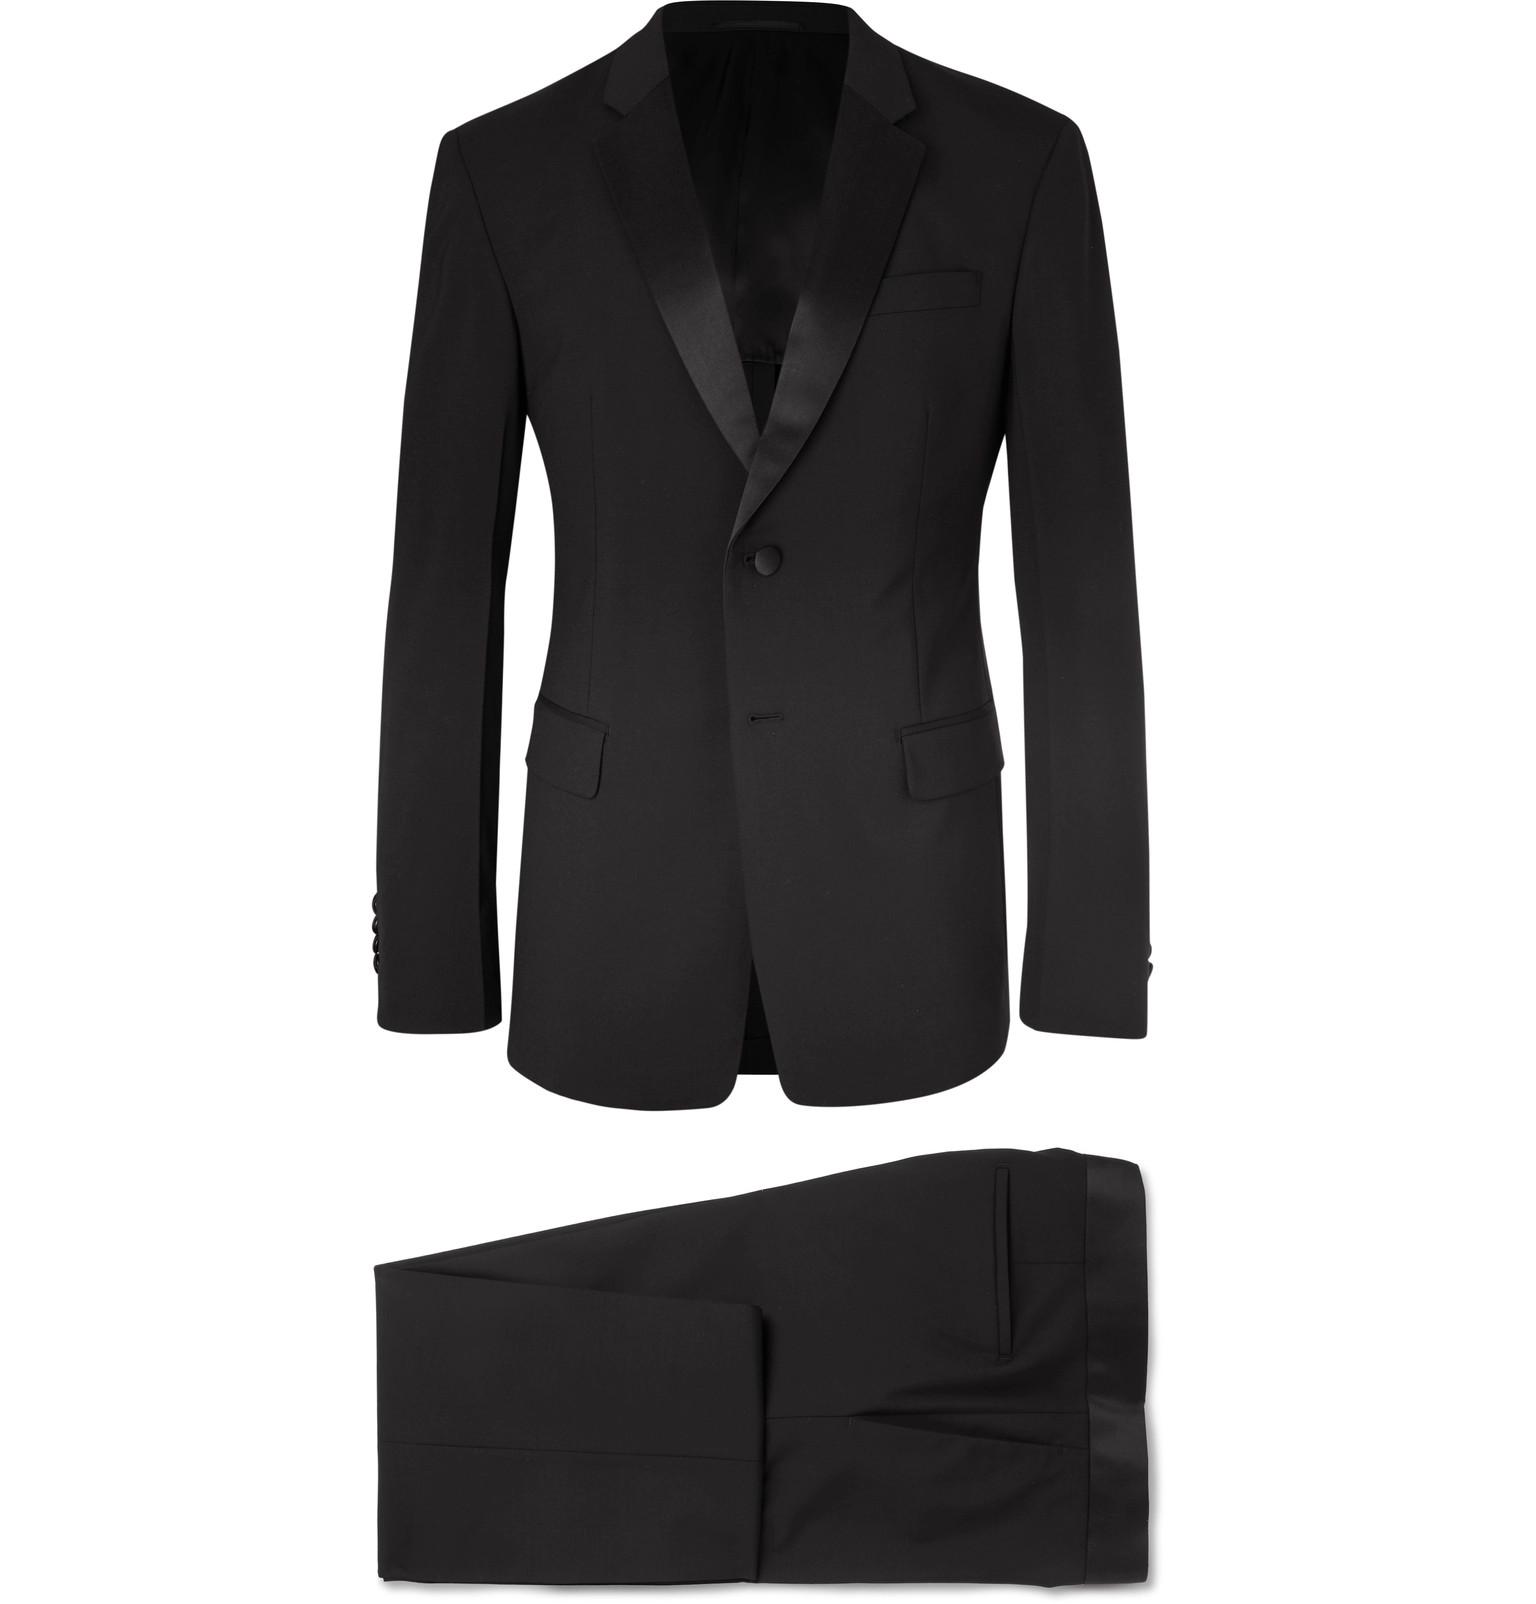 Lyst - Prada Black Slim-fit Silk Satin-trimmed Virgin Wool-blend Tuxedo ...